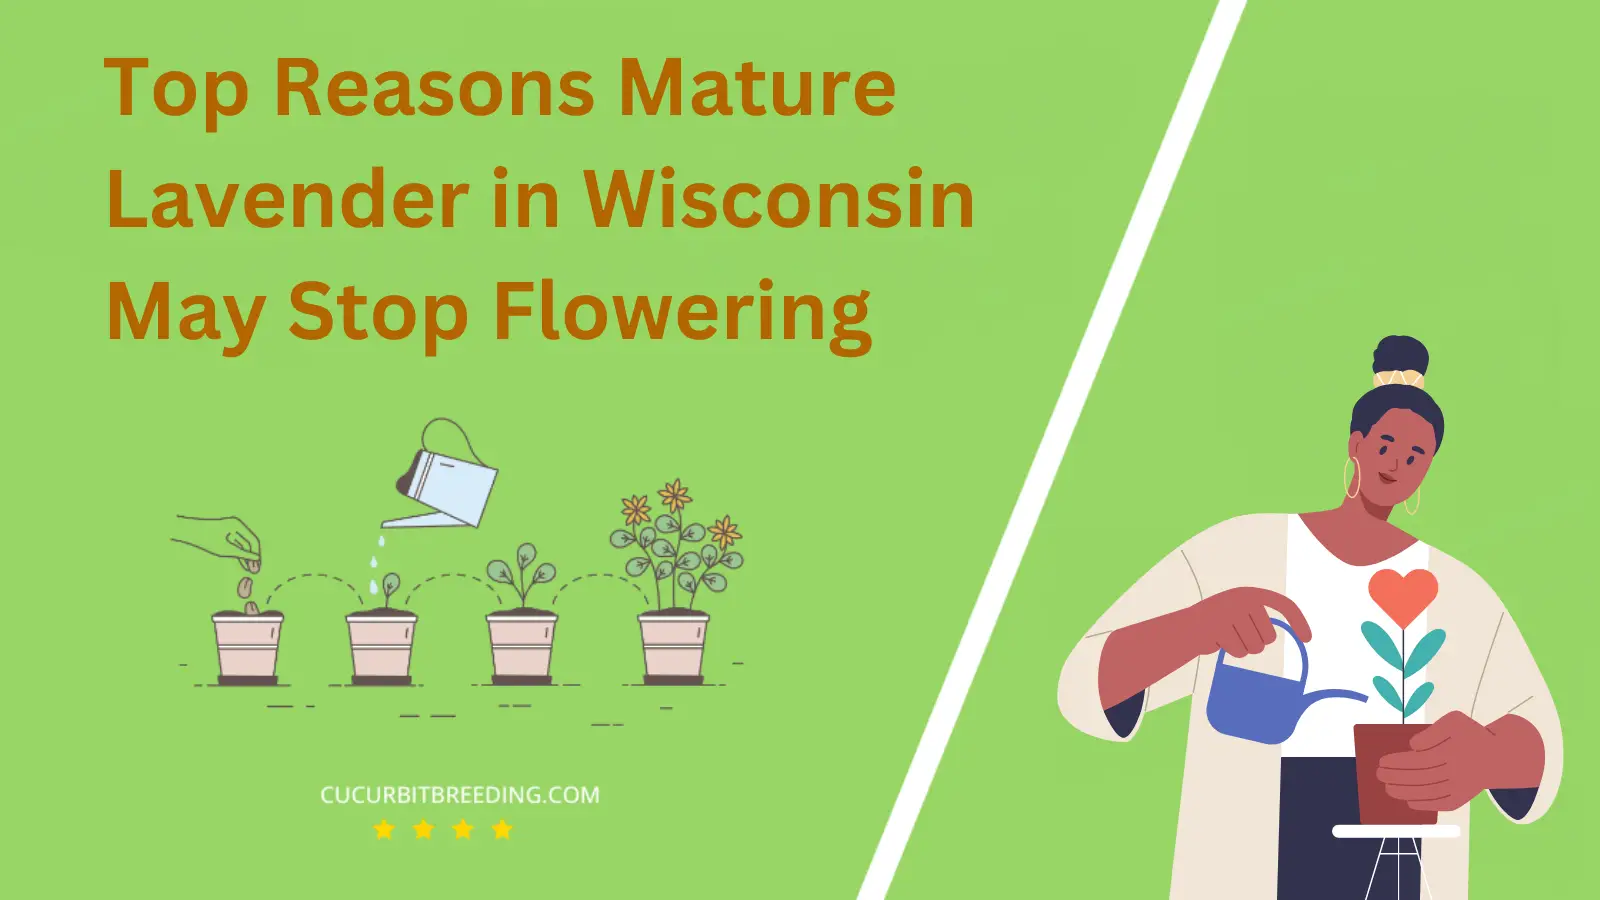 Top Reasons Mature Lavender in Wisconsin May Stop Flowering